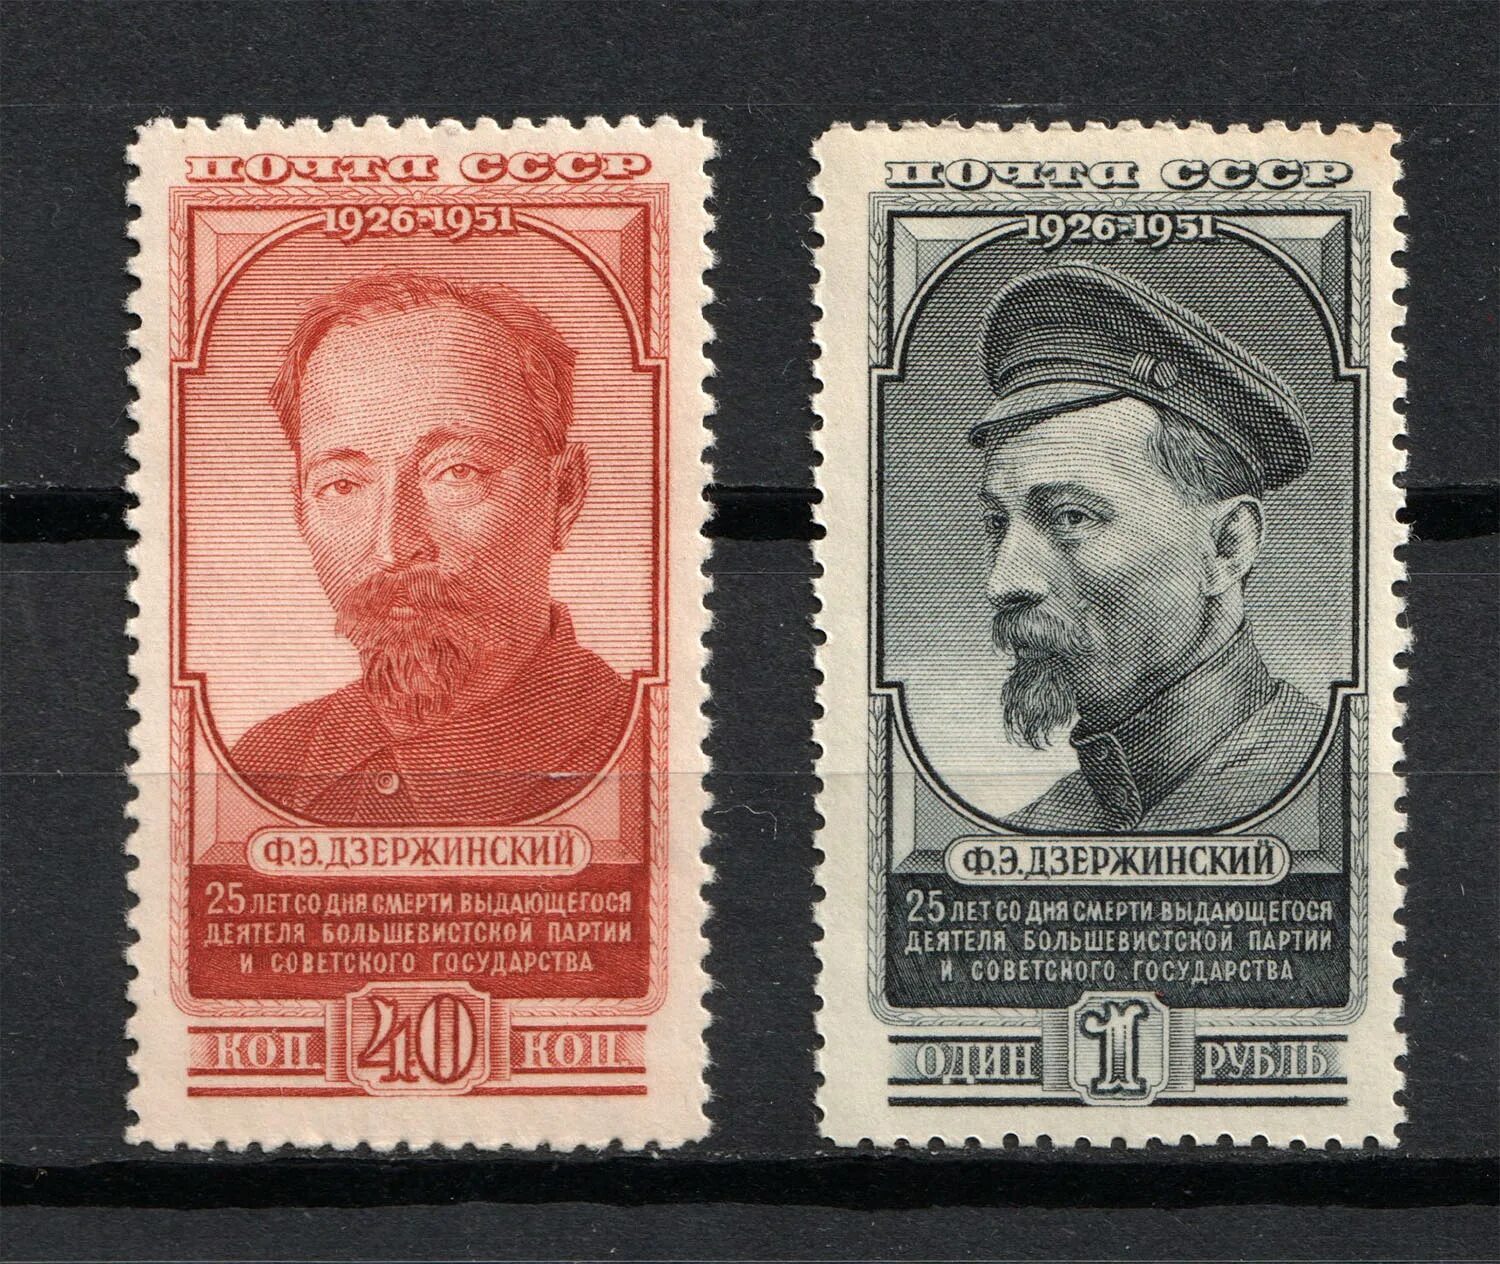 1951 25. Марки с Дзержинским. Дзержинский марка. 1962 Марка с Дзержинским.